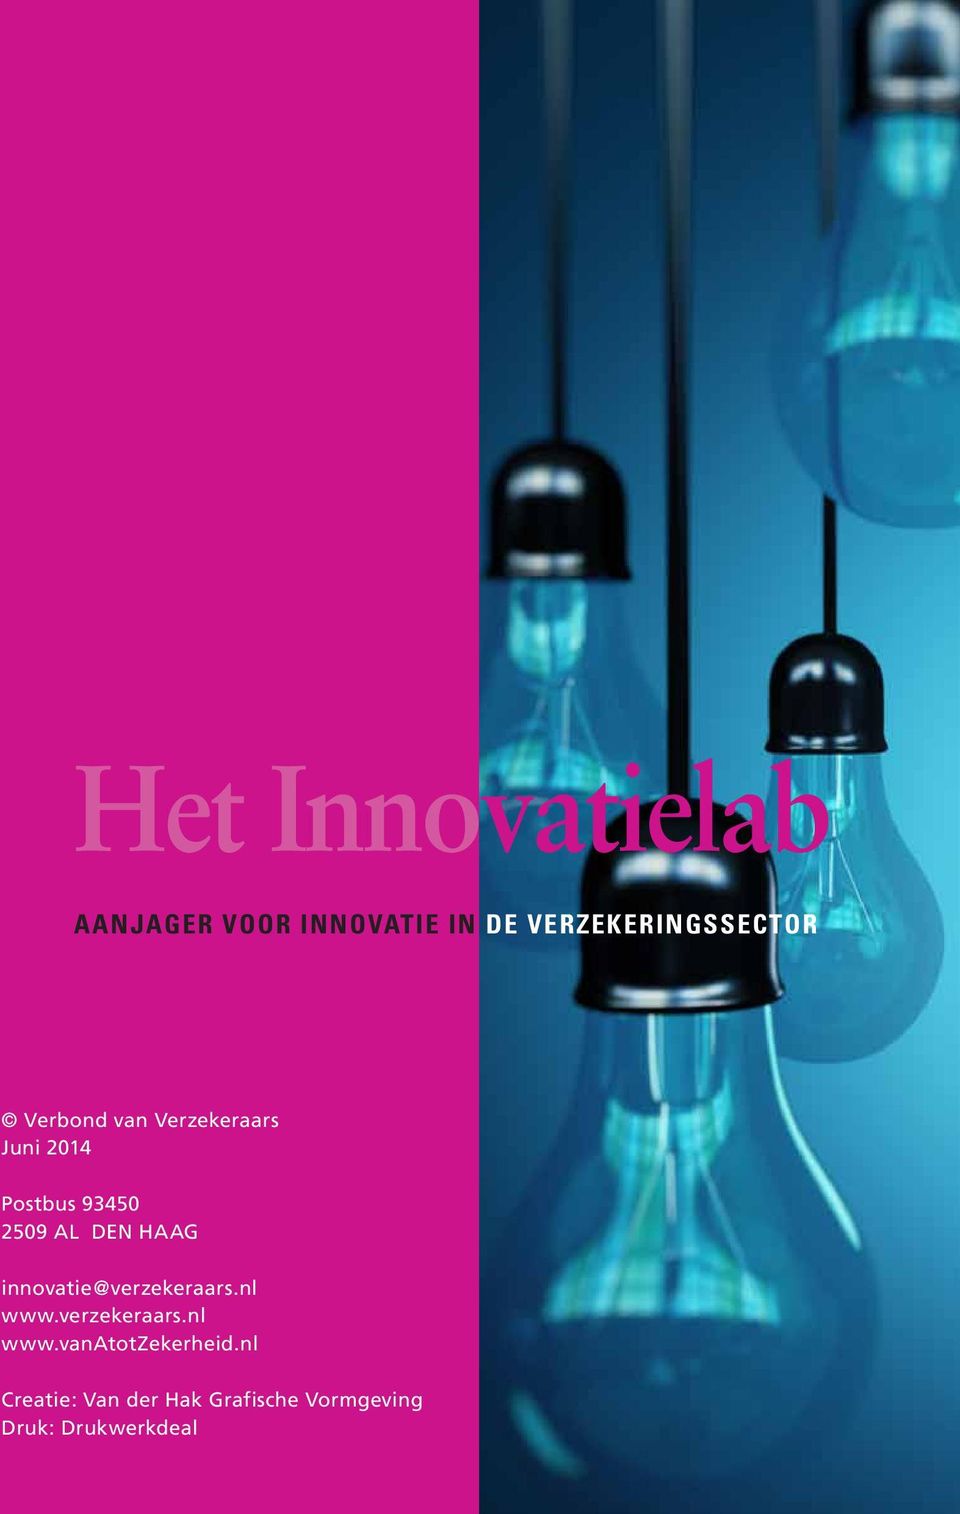 innovatie@verzekeraars.nl www.verzekeraars.nl www.vanatotzekerheid.